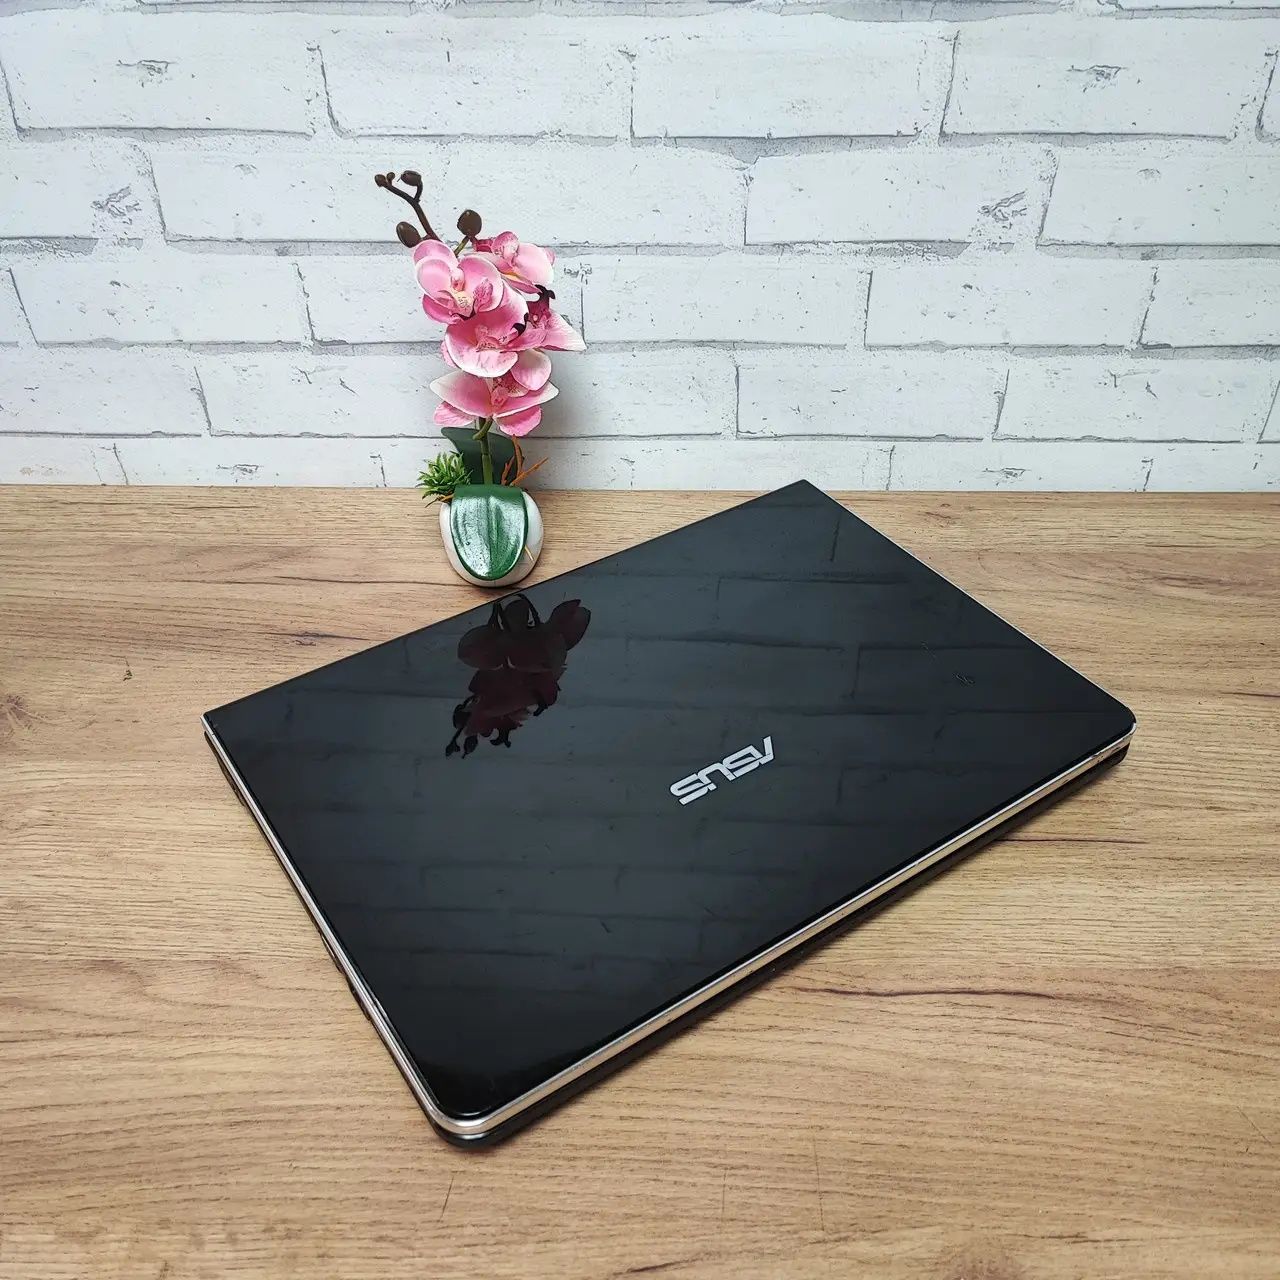 Продам ноутбук Asus N55S
Full HD